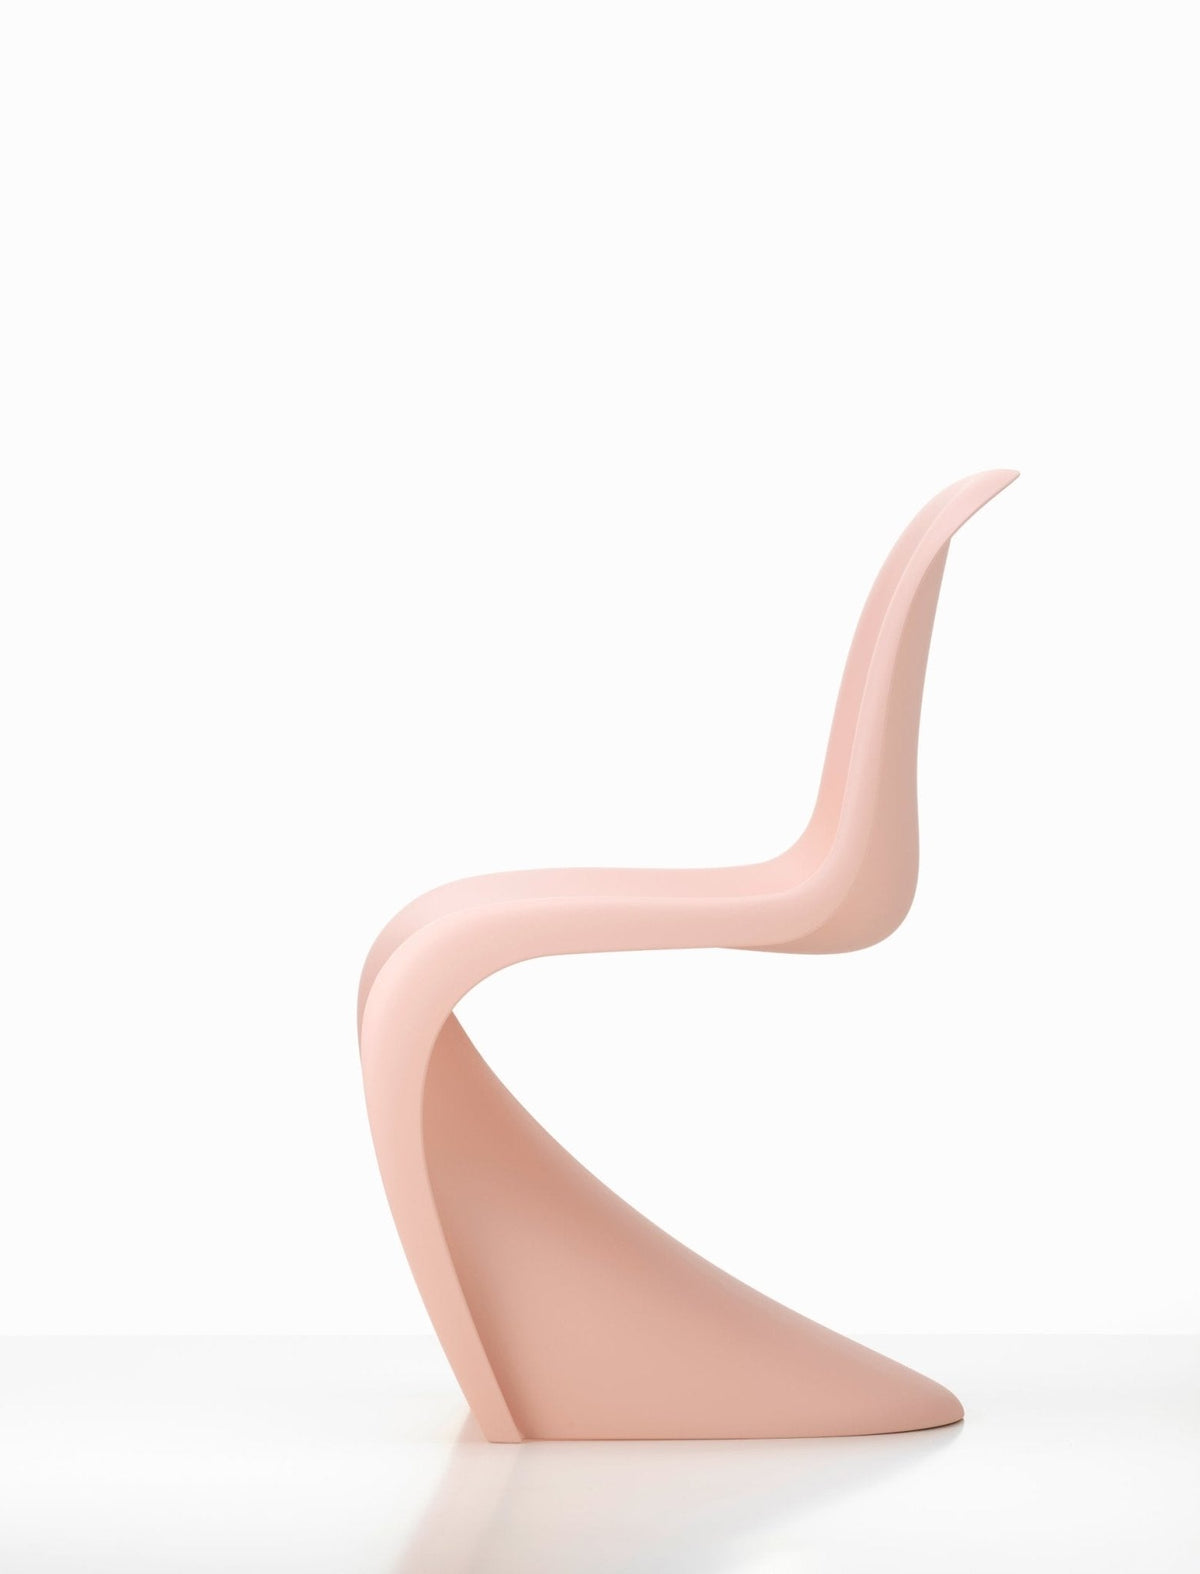 Vitra Panton tuoli roosa - Laatukaluste